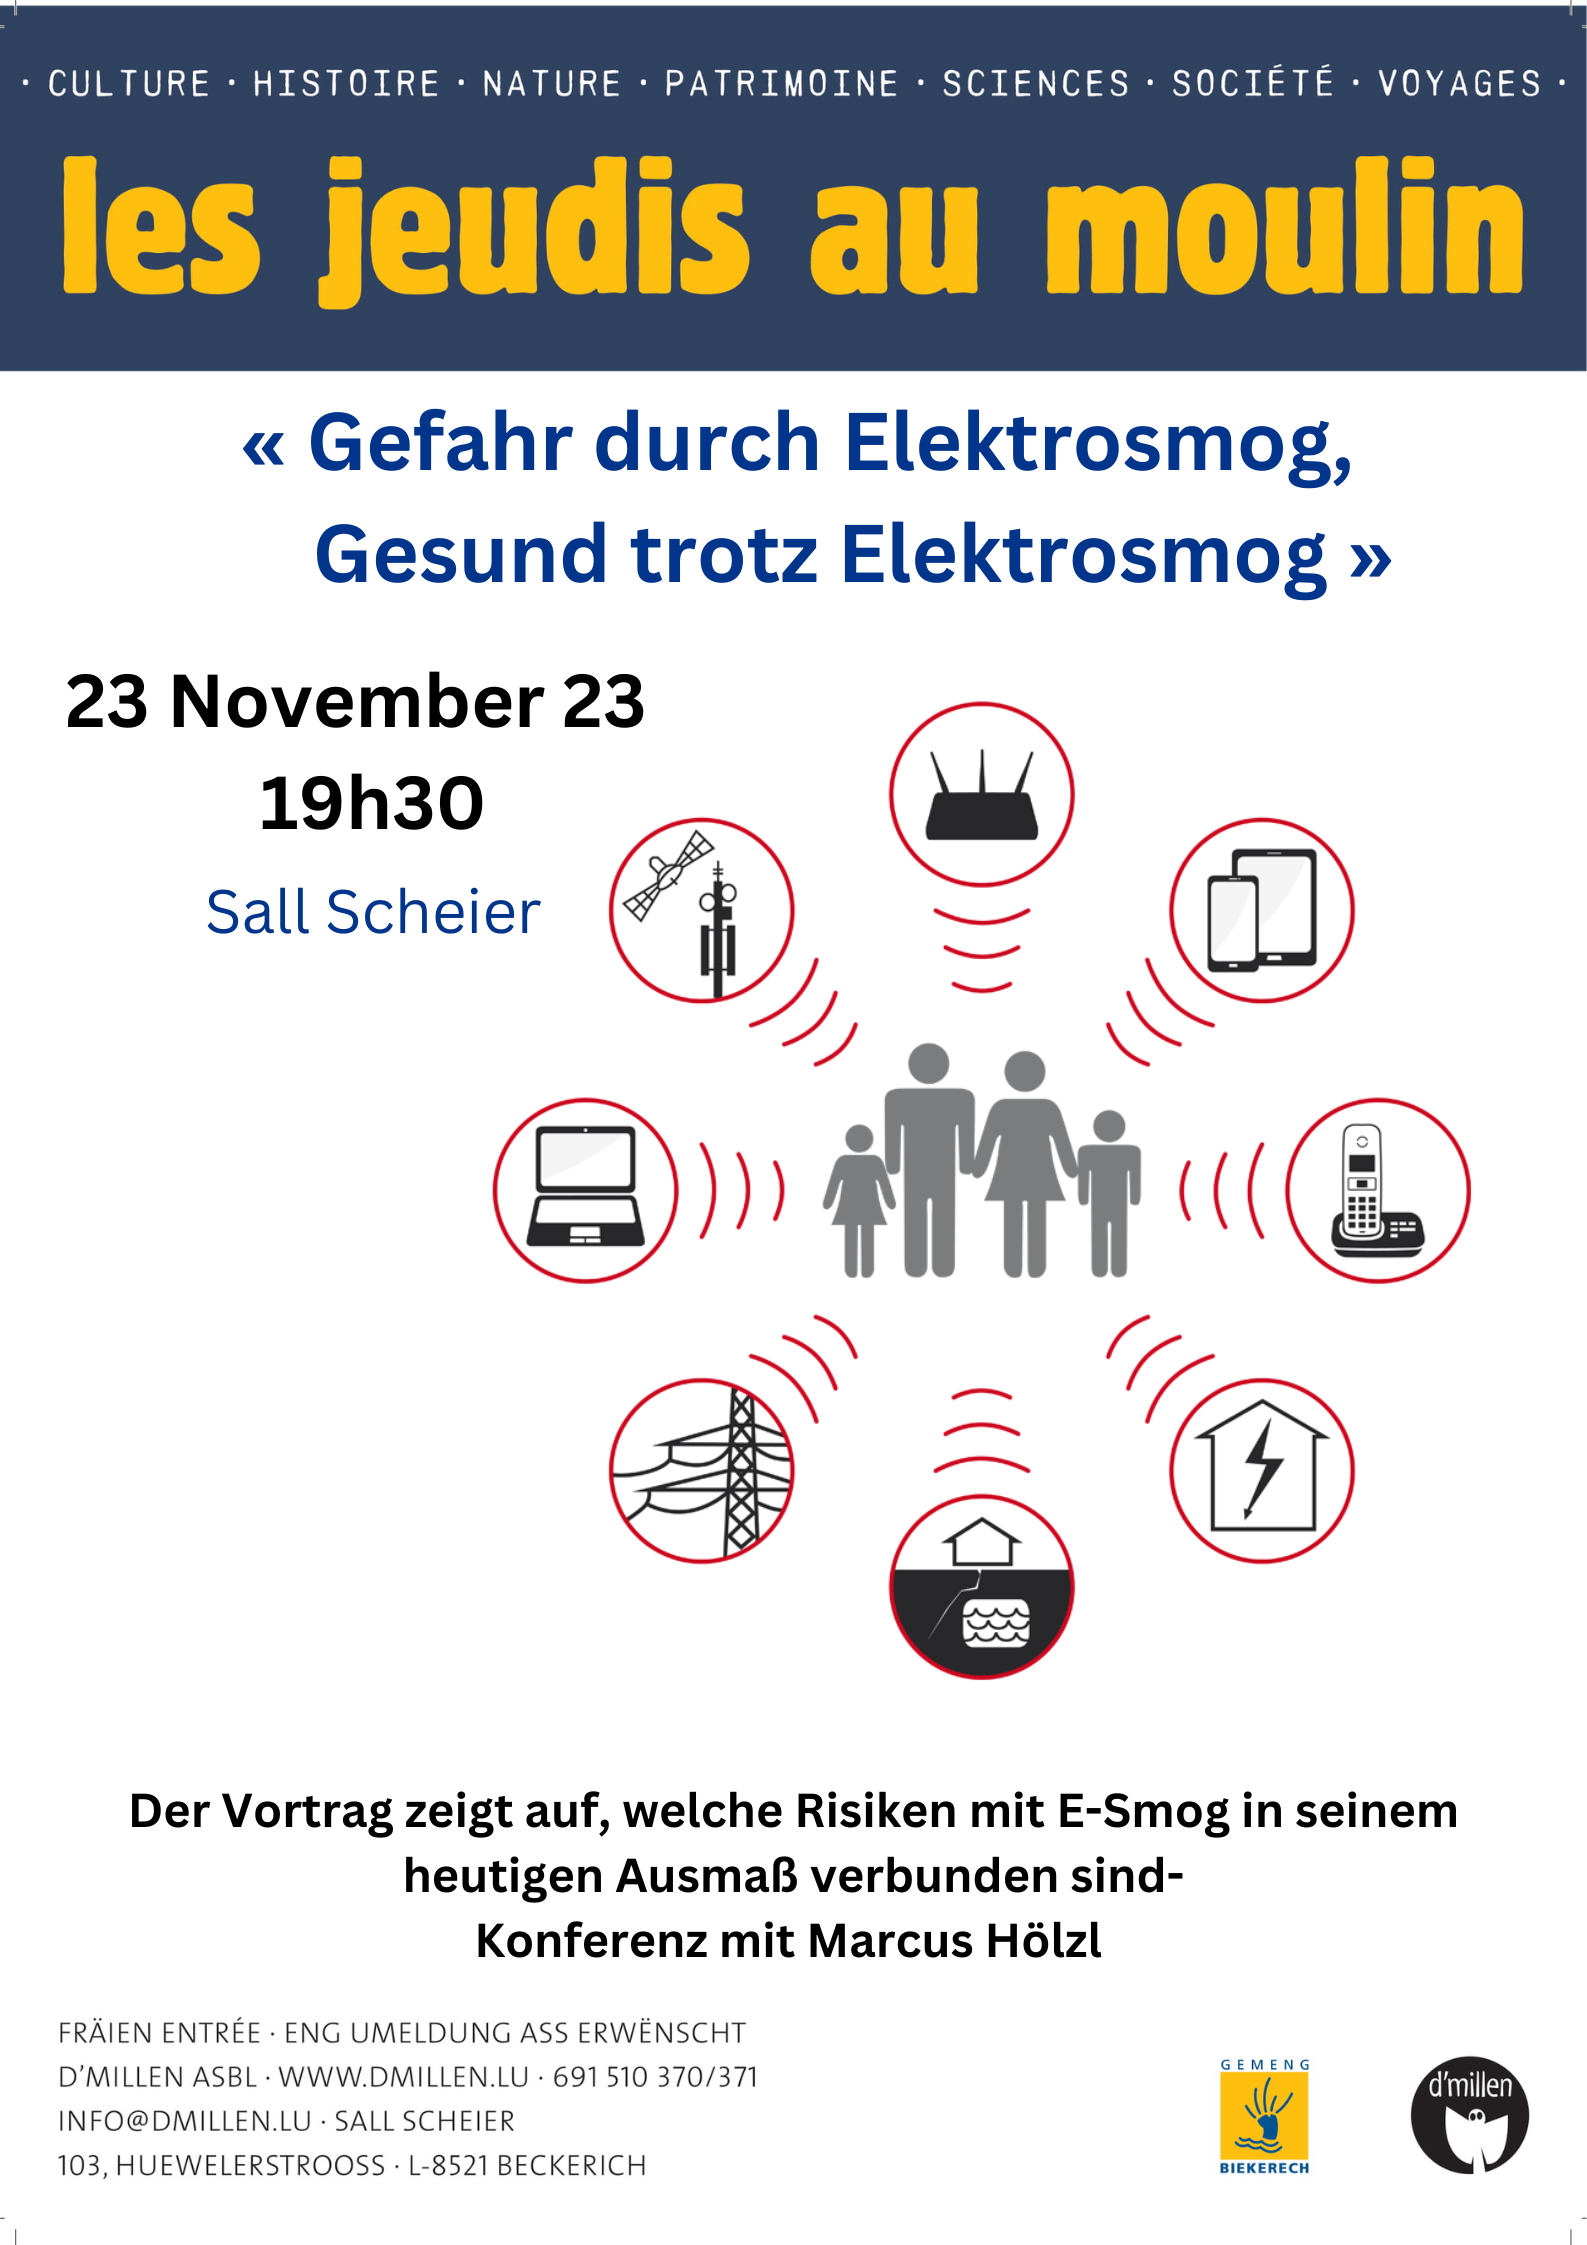 JAM - "Danger from electrosmog - healthy despite electrosmog": Conference with Marcus Hölzl